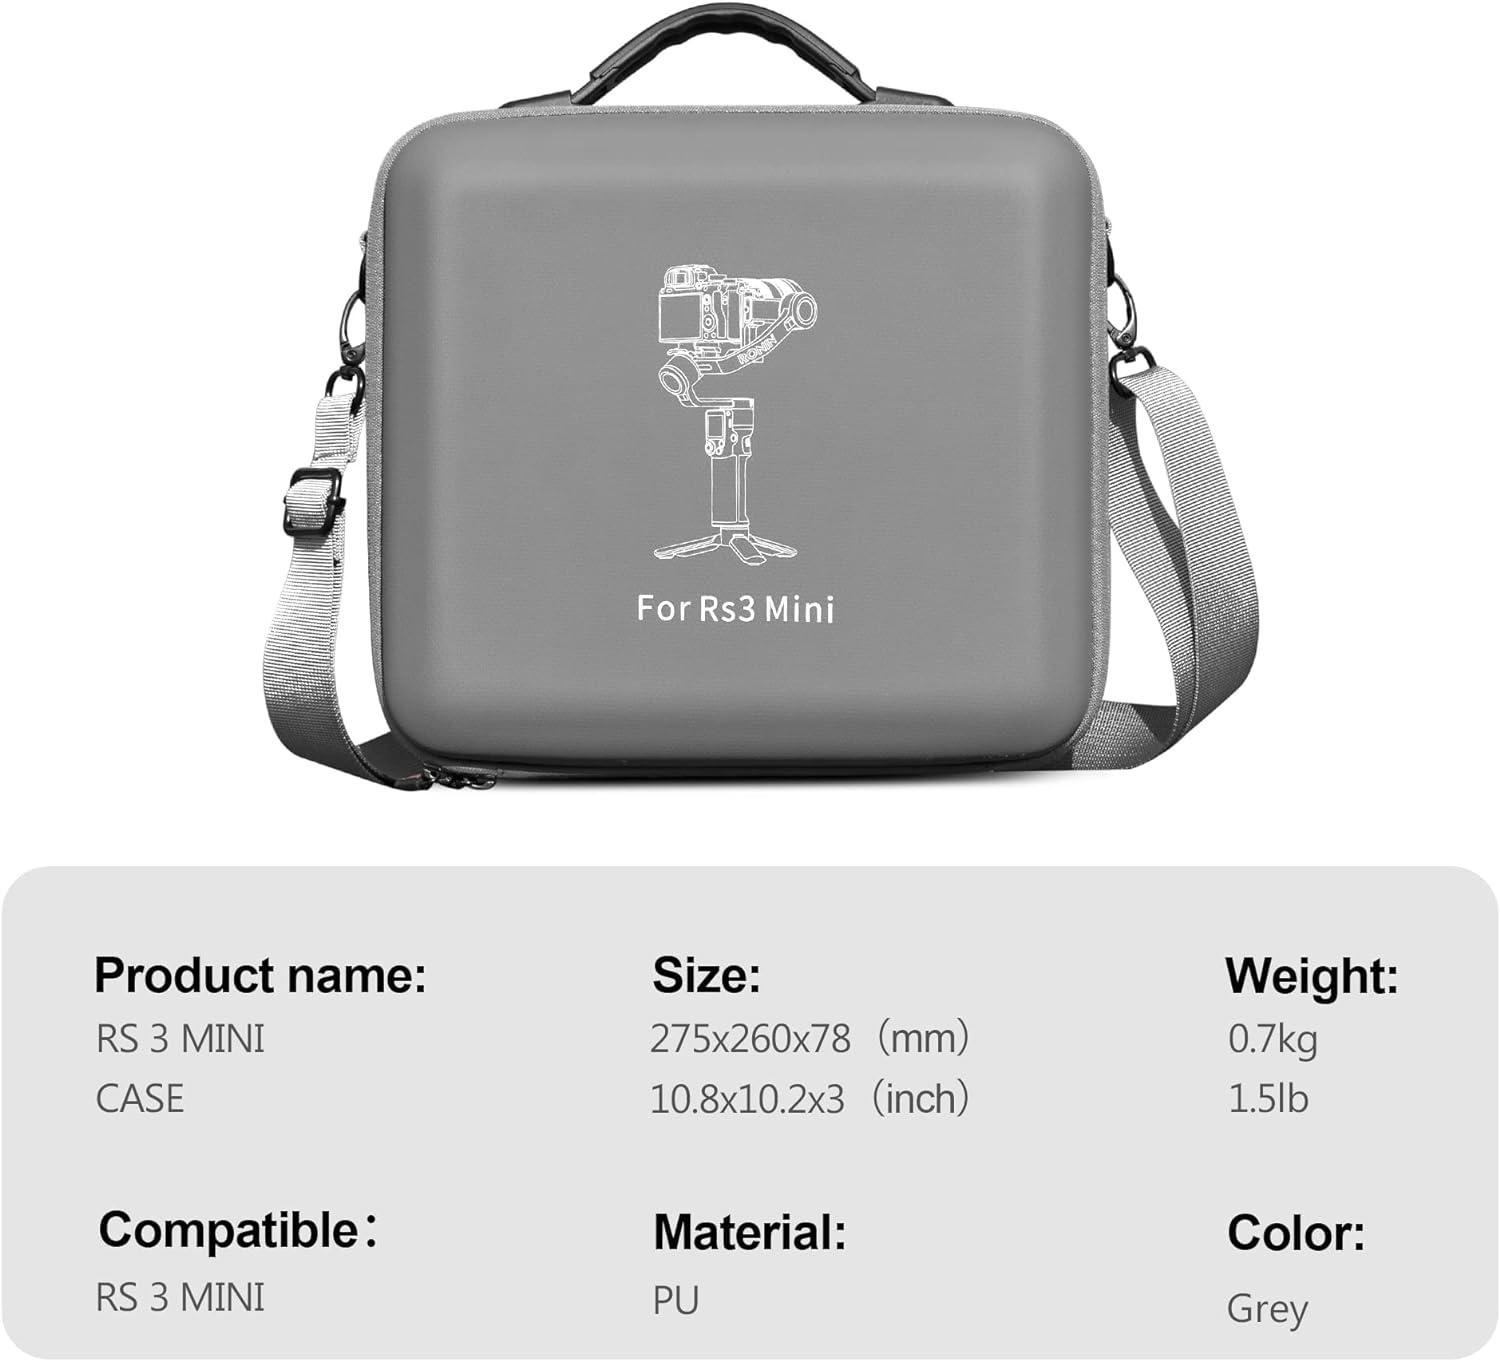 Original Portable Case Storage Shoulder Bag for DJI Mini 3/Mini 3